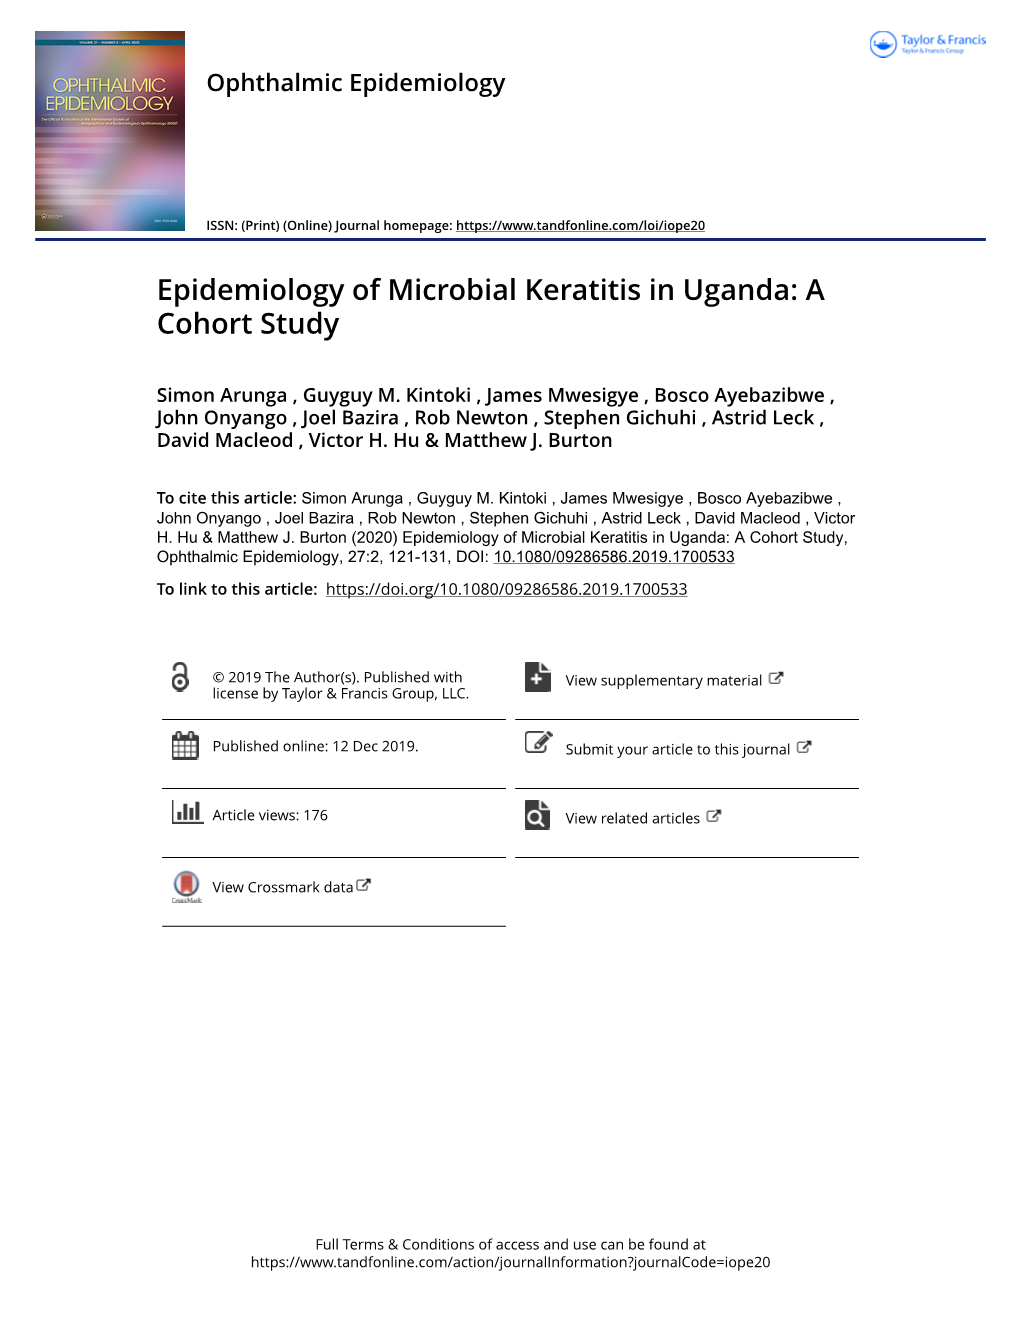 Epidemiology of Microbial Keratitis in Uganda: a Cohort Study